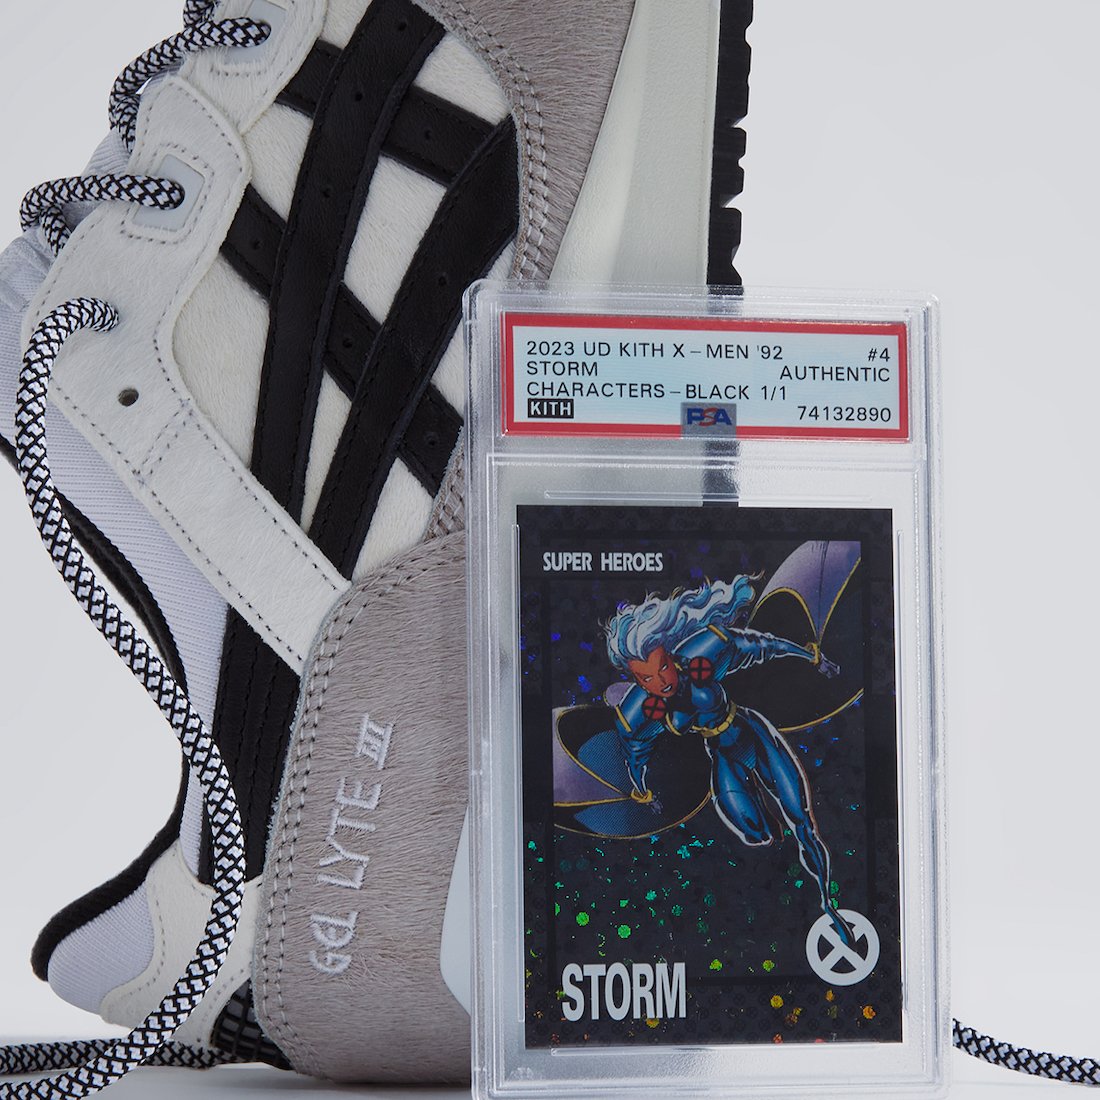 X-Men Kith Asics Gel Lyte III Storm